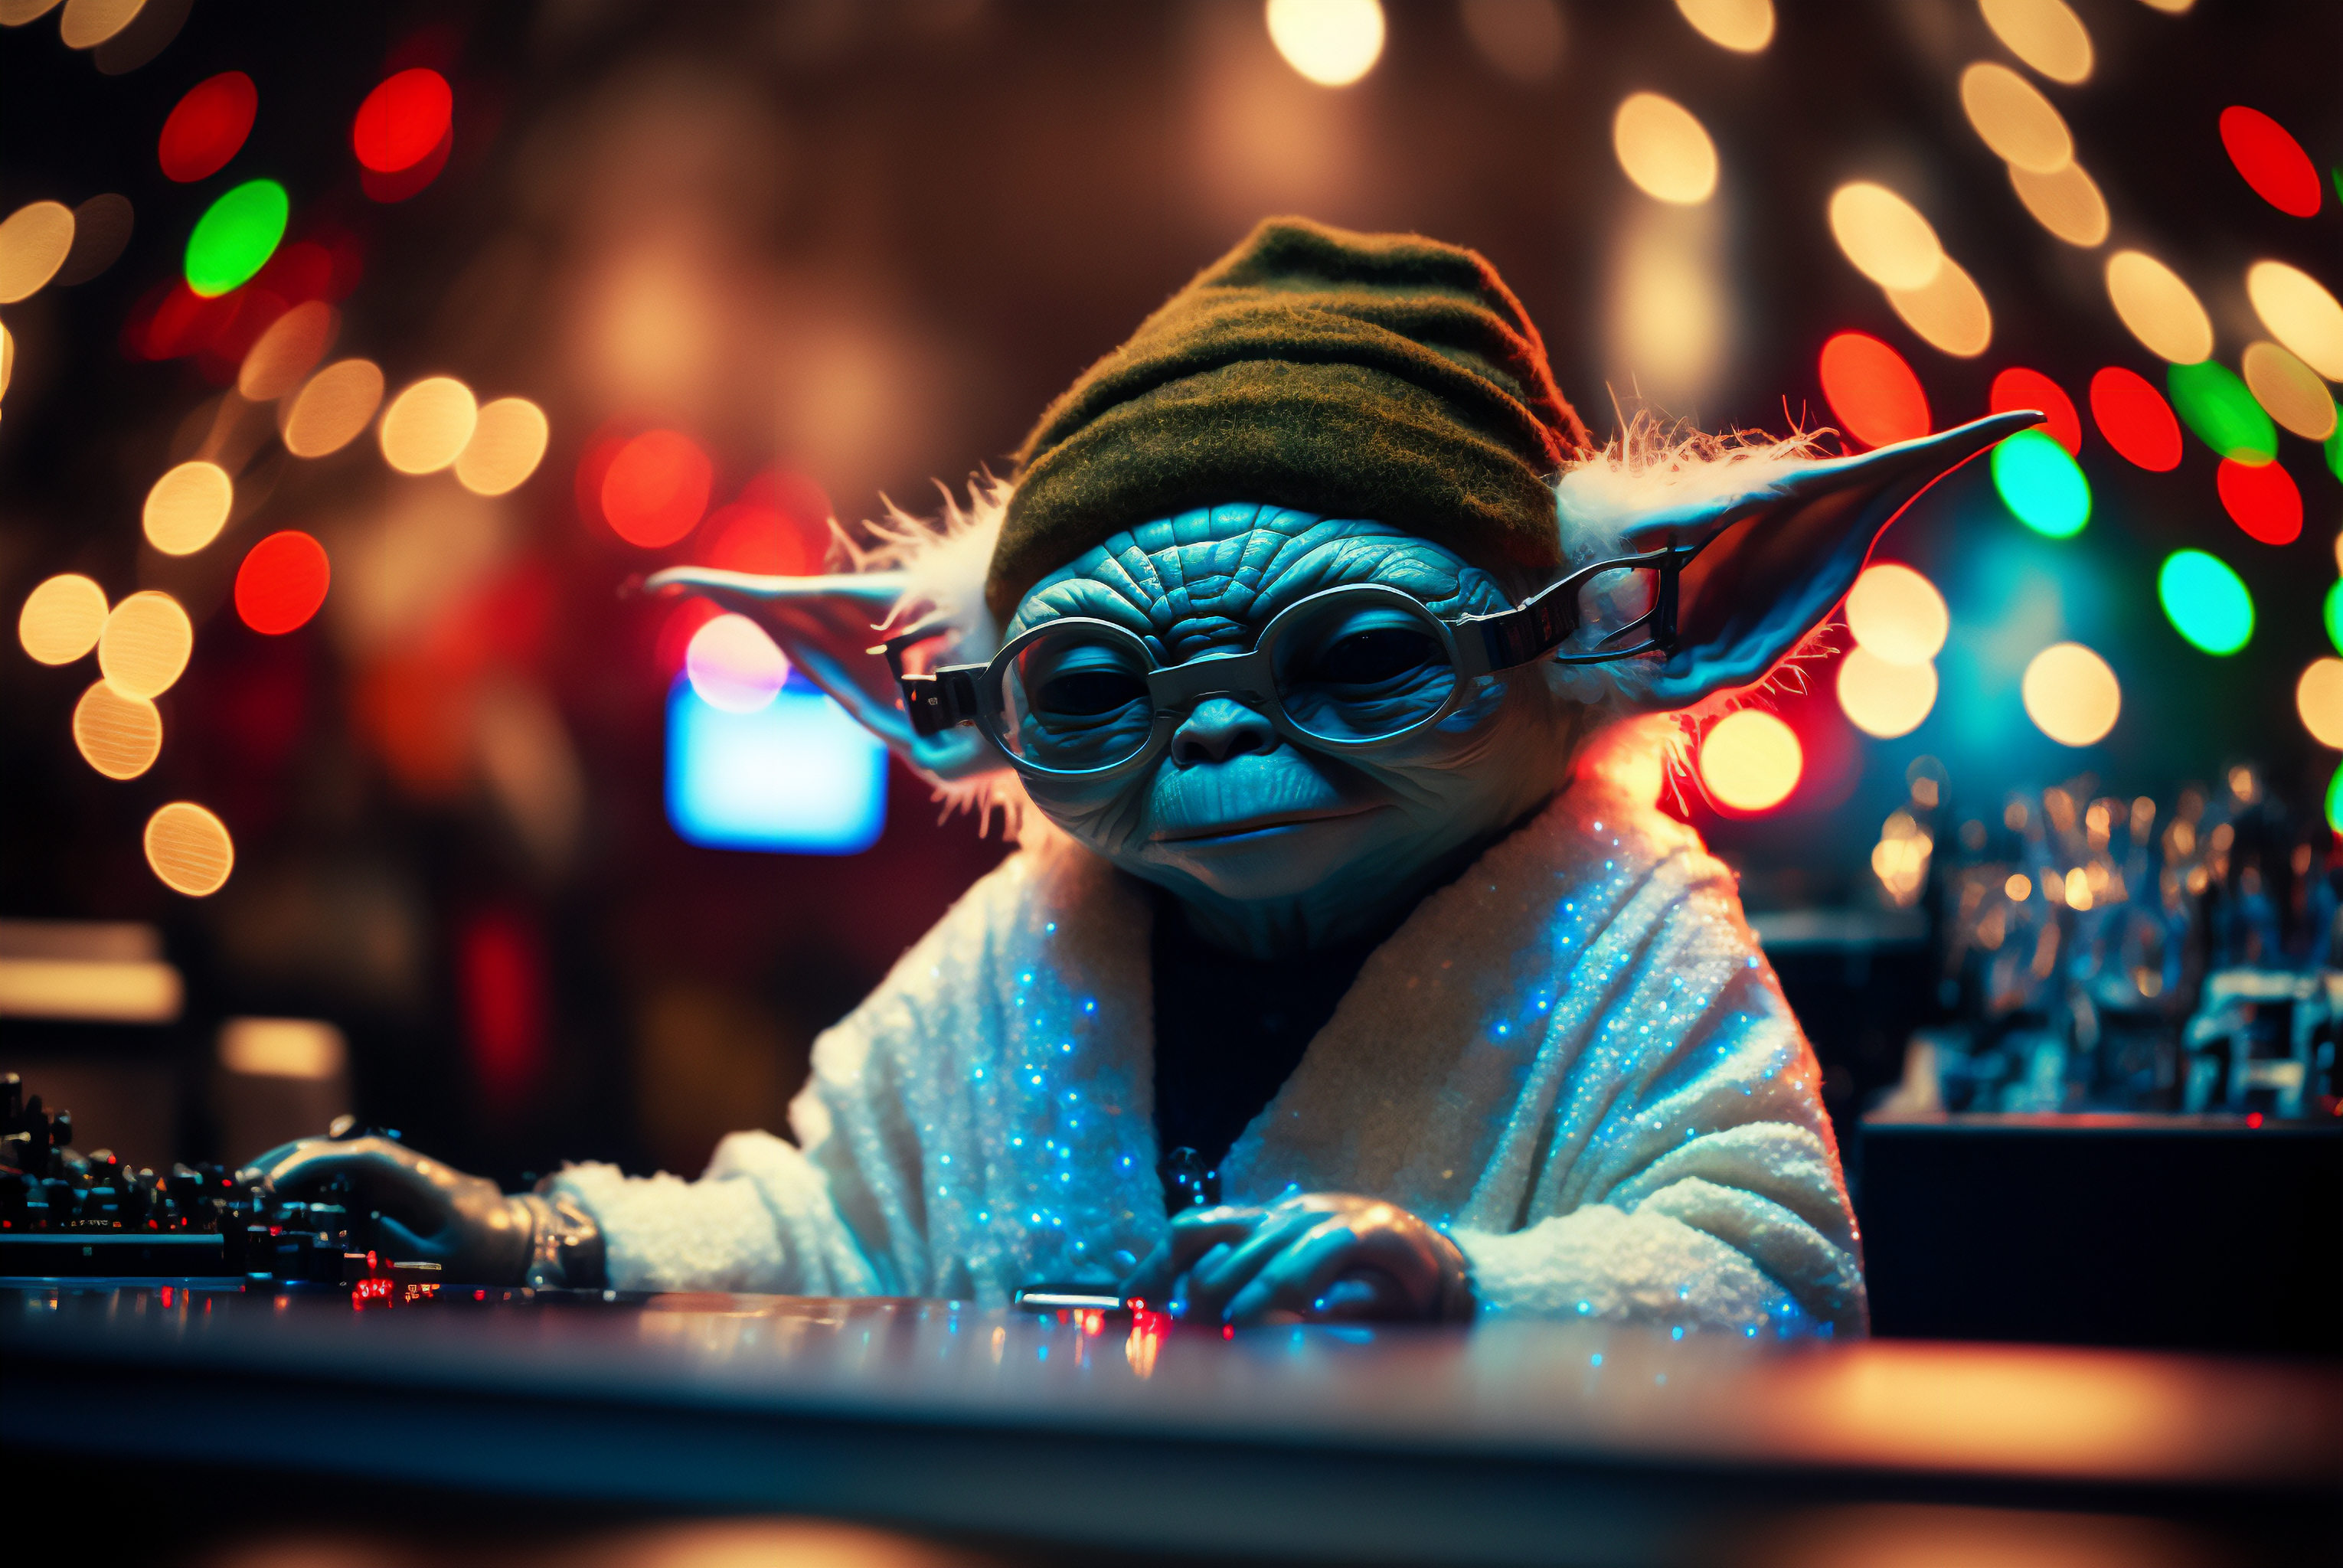 General 3060x2048 AI art disc jockey Party Room bokeh Yoda Star Wars Christmas Santa hats lights movie characters